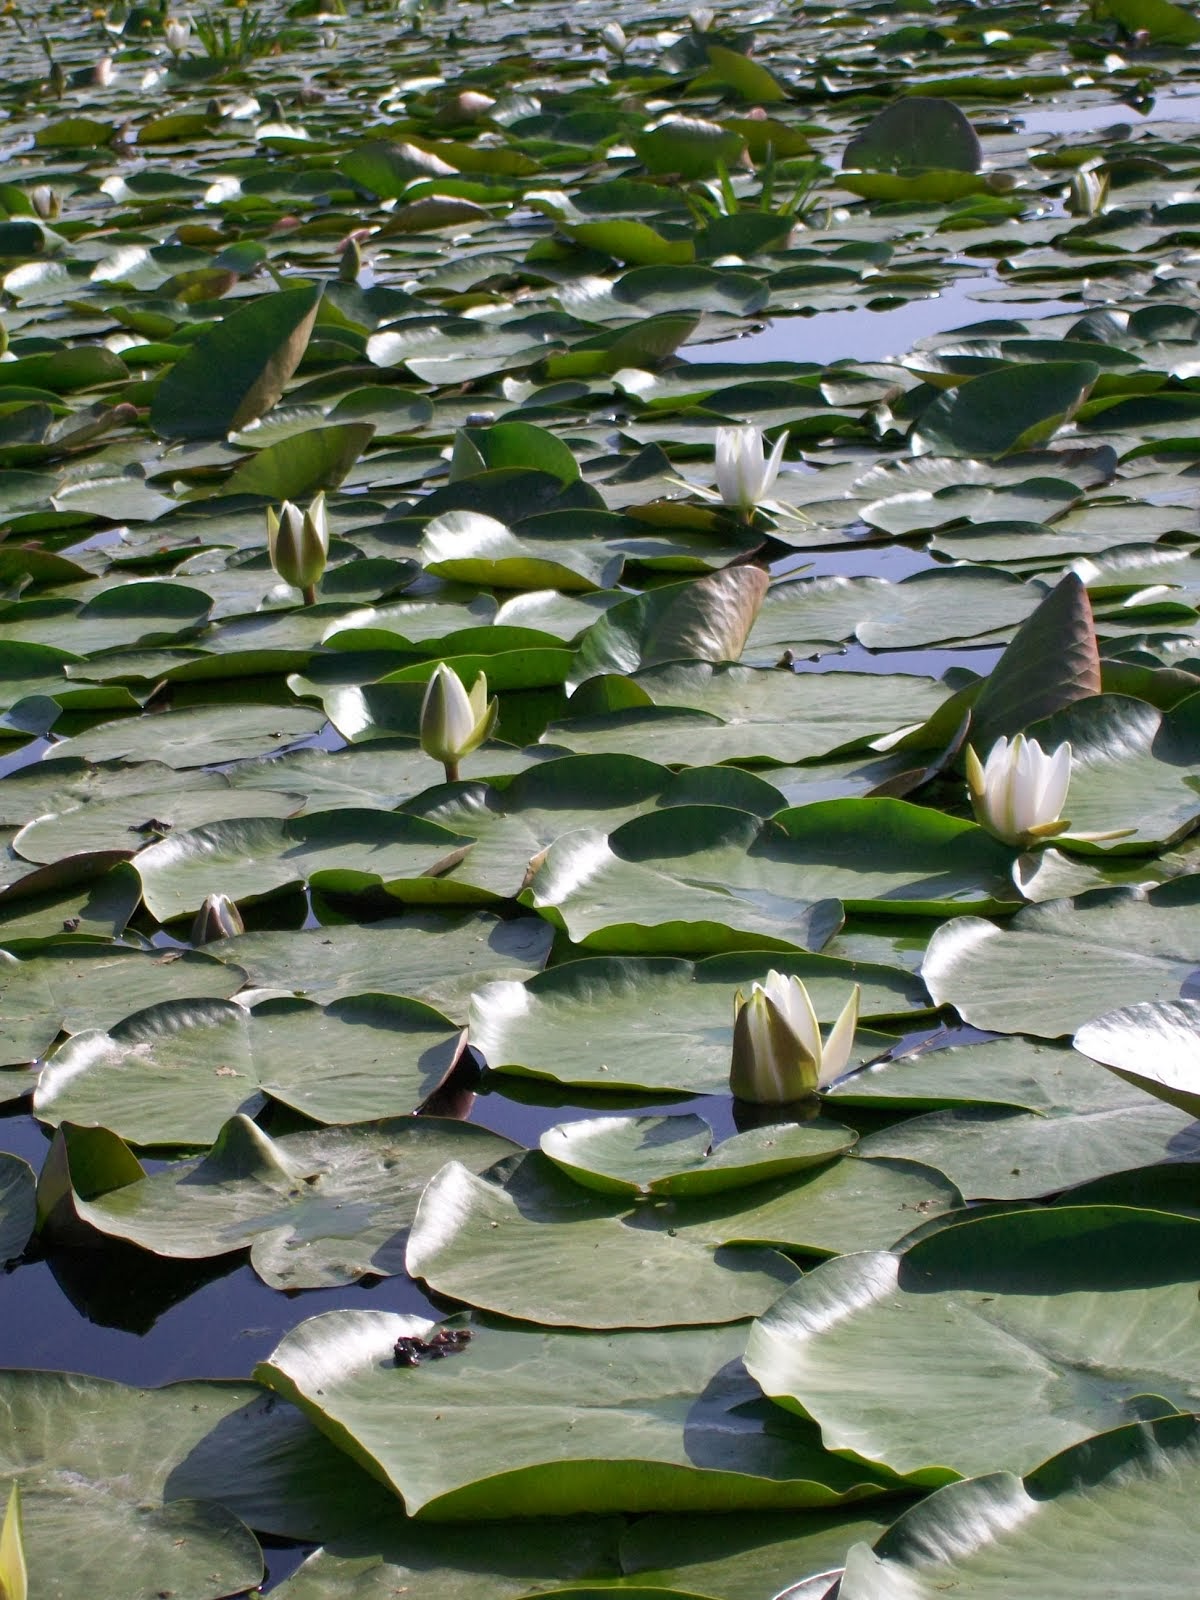 PESCUIT Delta Dunarii Boby  Danube Delta water lilies